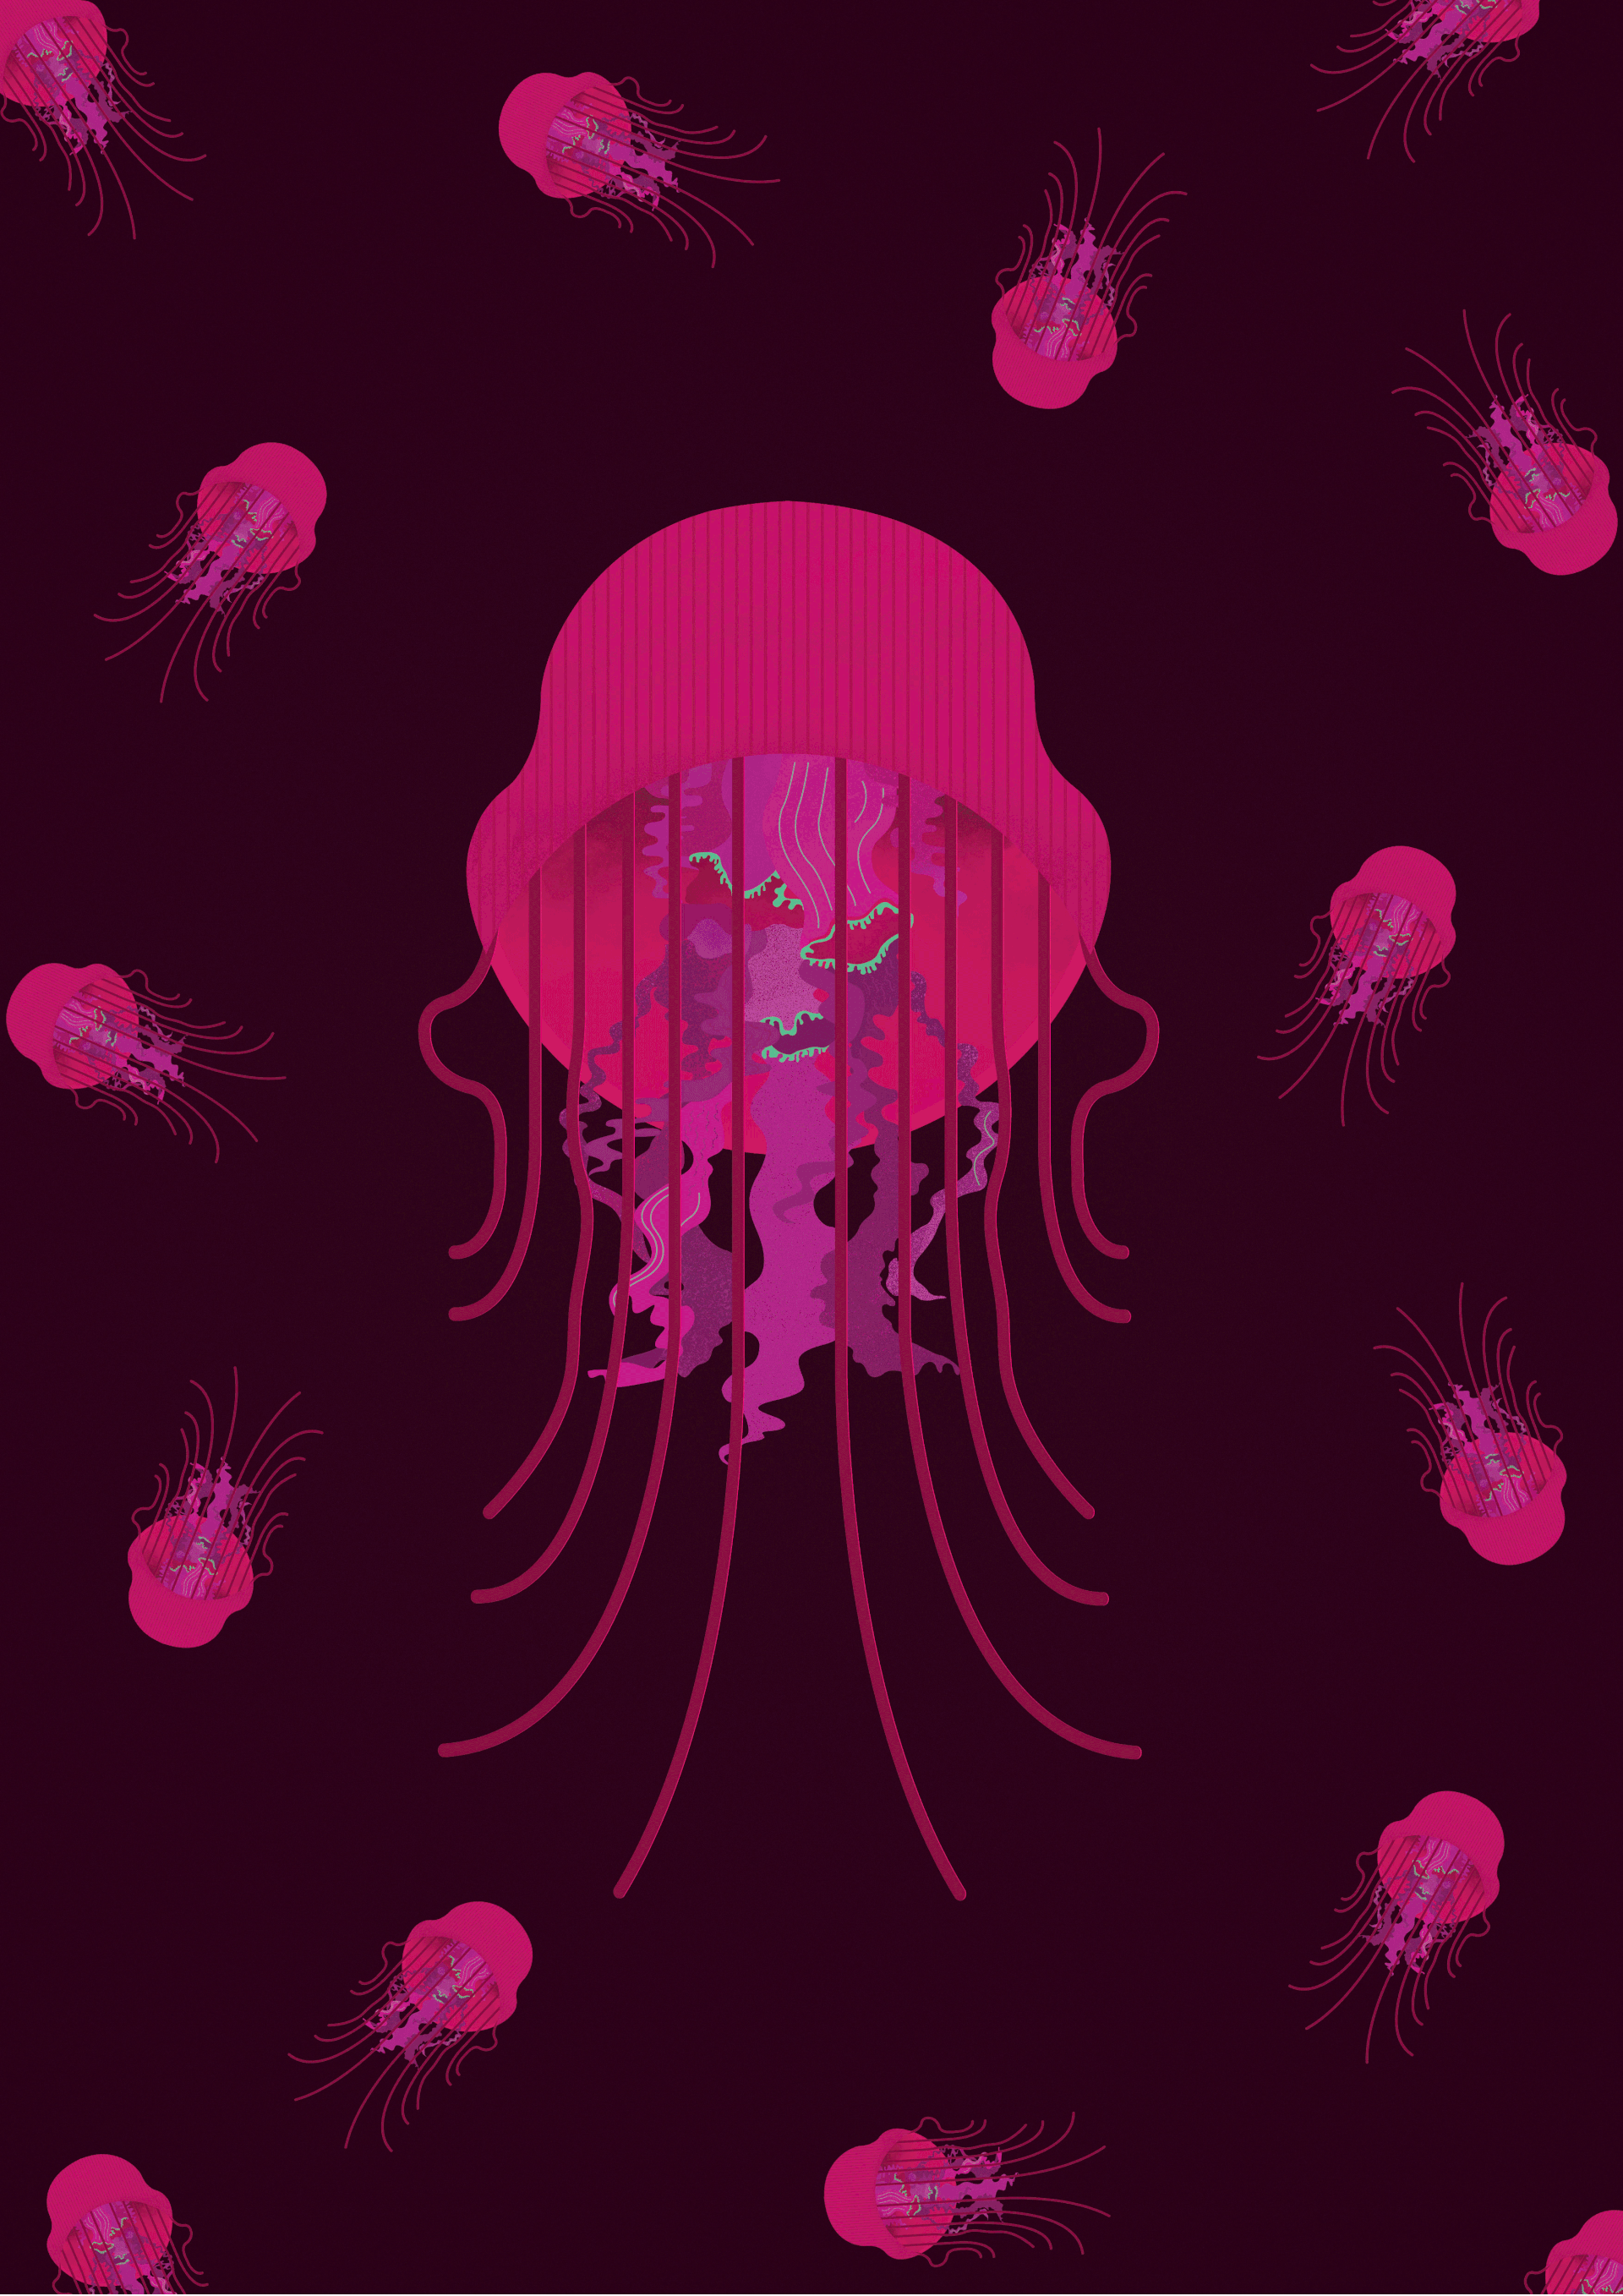 www.kaiitsang.com - Jellyfish Illustration